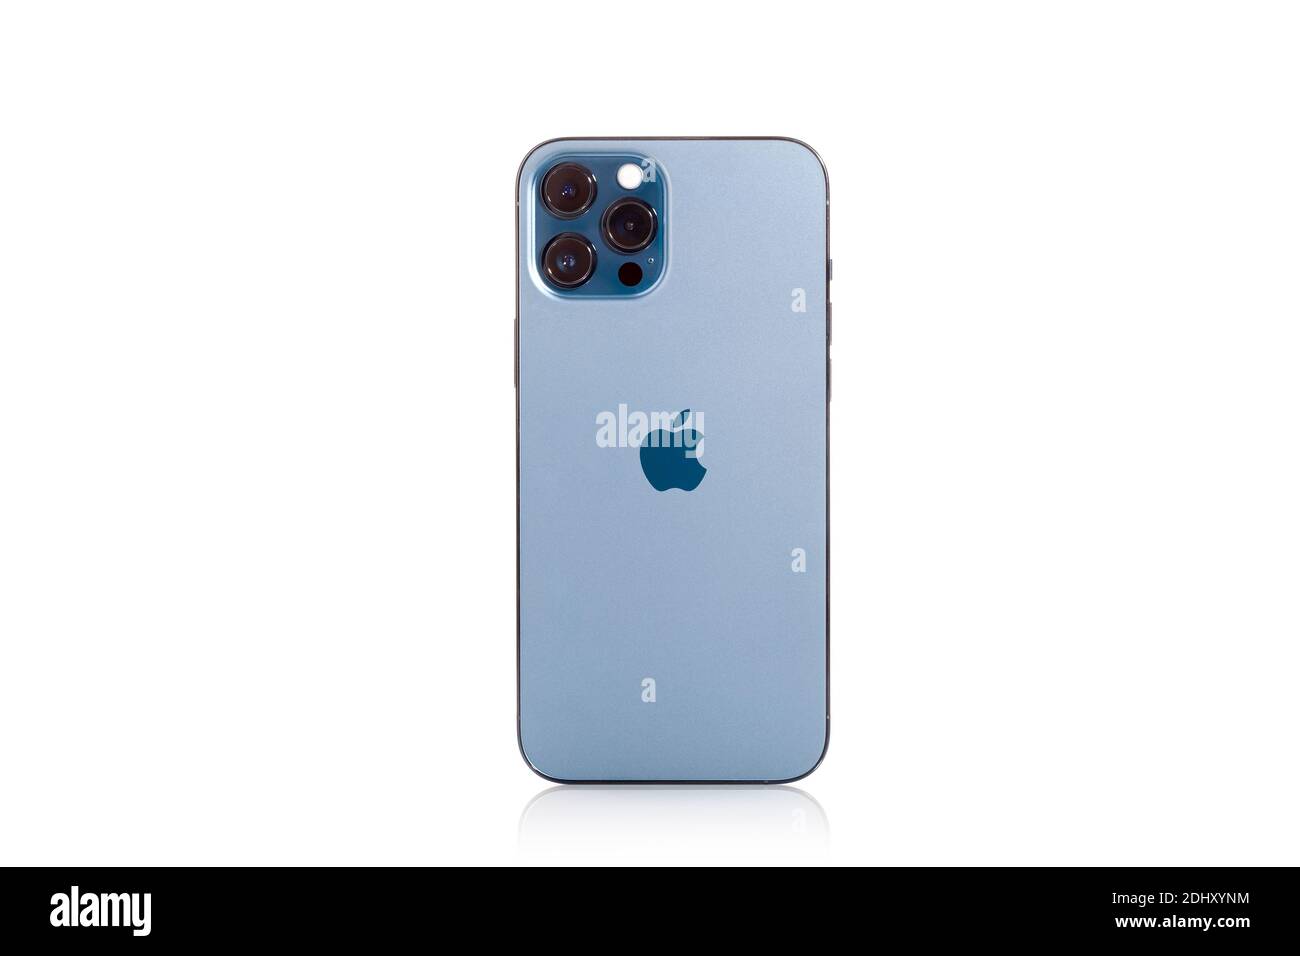 Iphone 15 1 терабайт. Айфон 12 Промакс голубой. Iphone 13 Pro Max голубой. Iphone 12 Pro Max Blue. Айфон 13 Промакс синий.